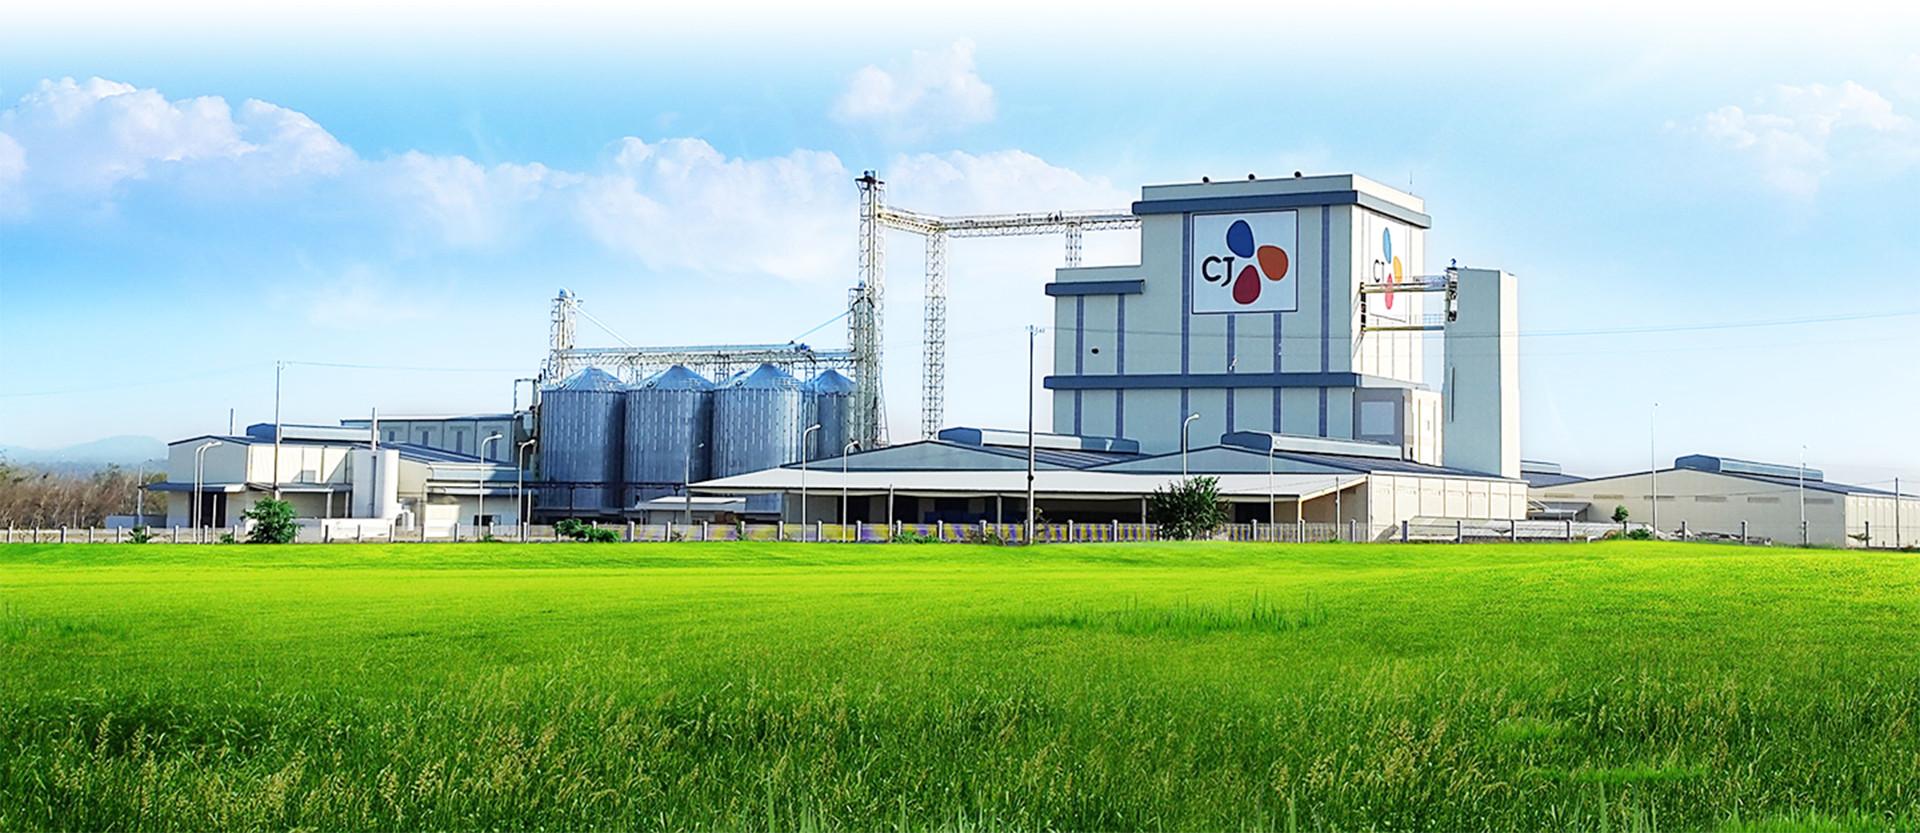 CJ-Vina-Agri-Factory